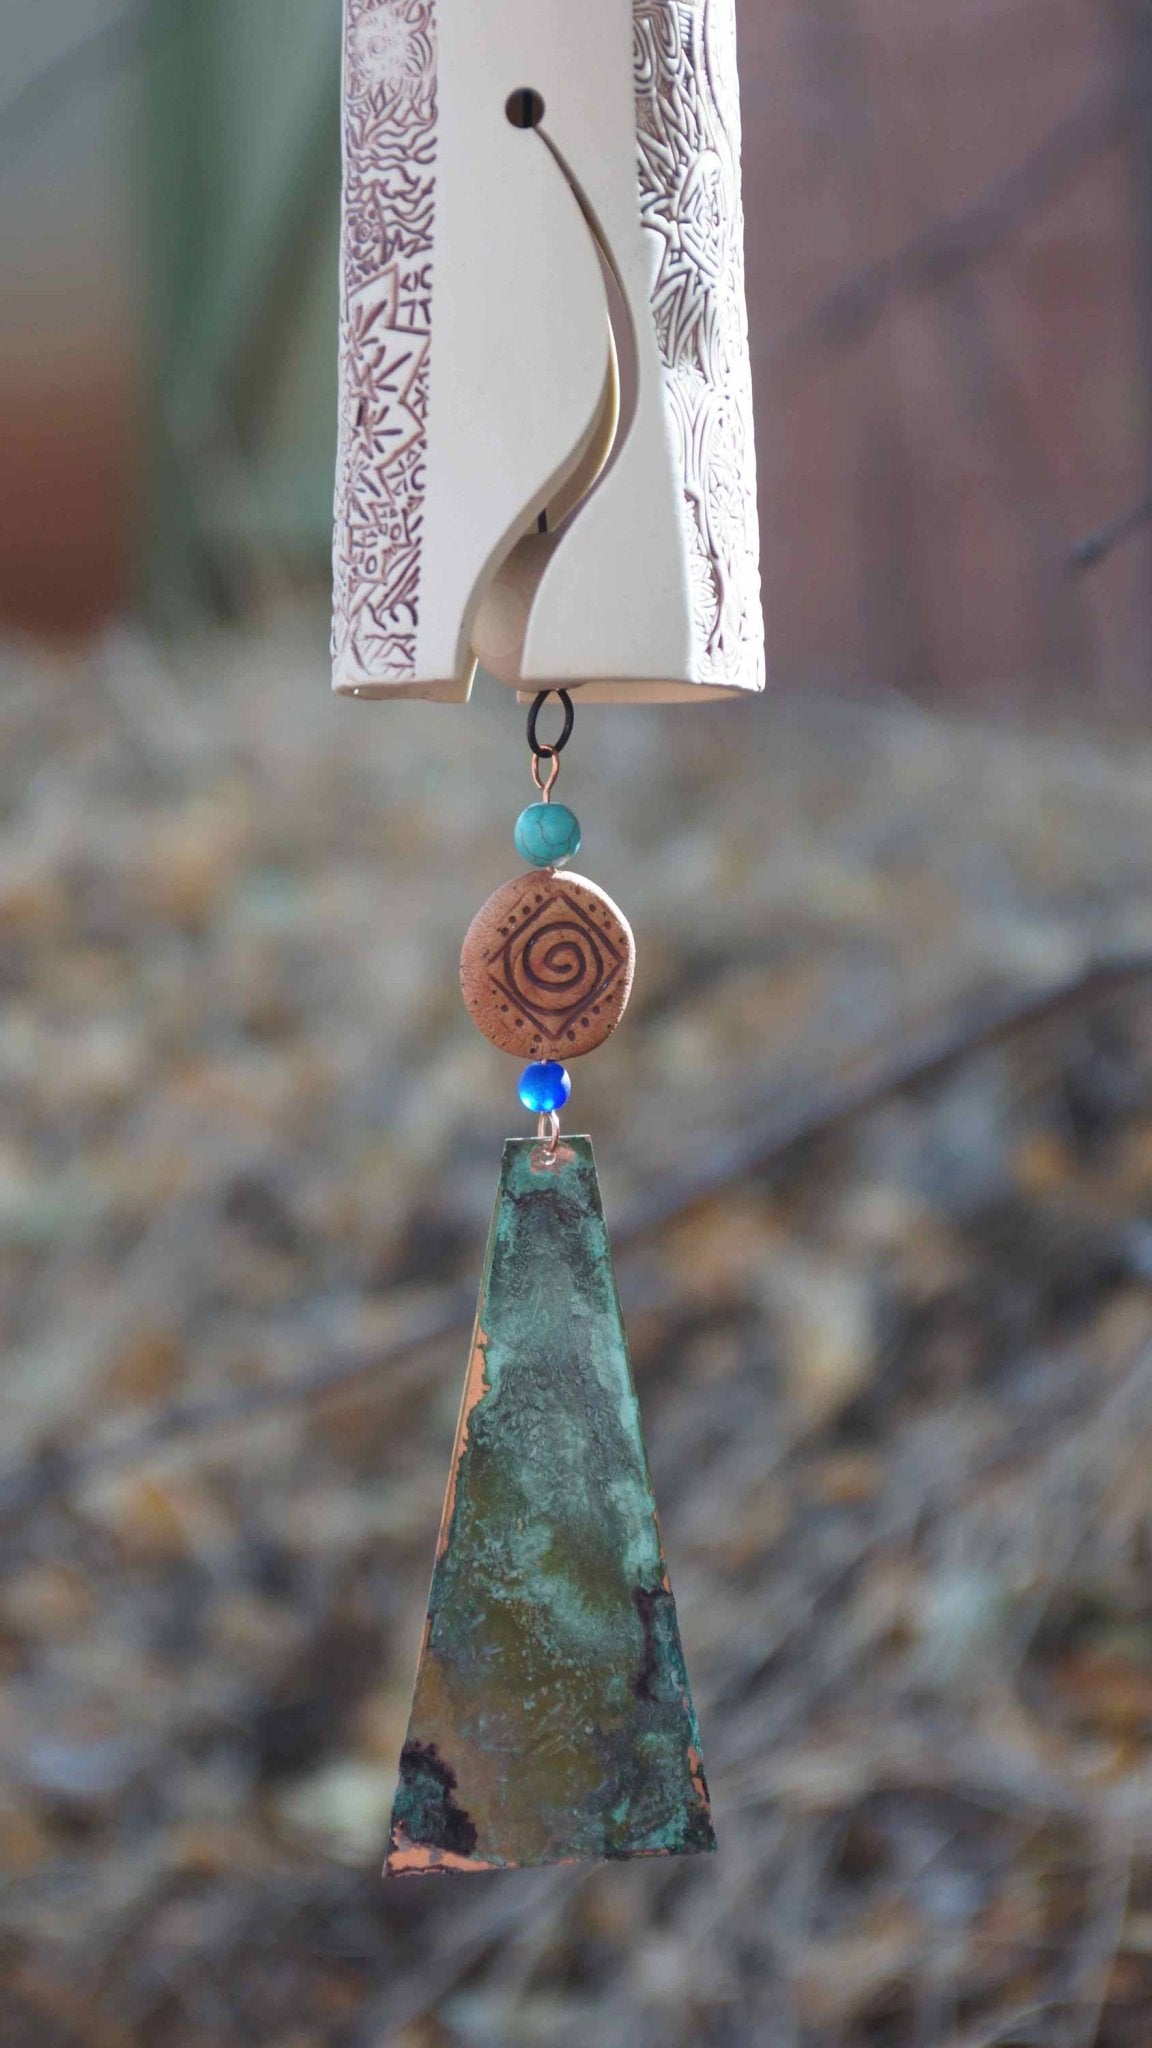 Handmade White Wind Chime Garden Bell with Starburst Pattern - EarthWind Bells